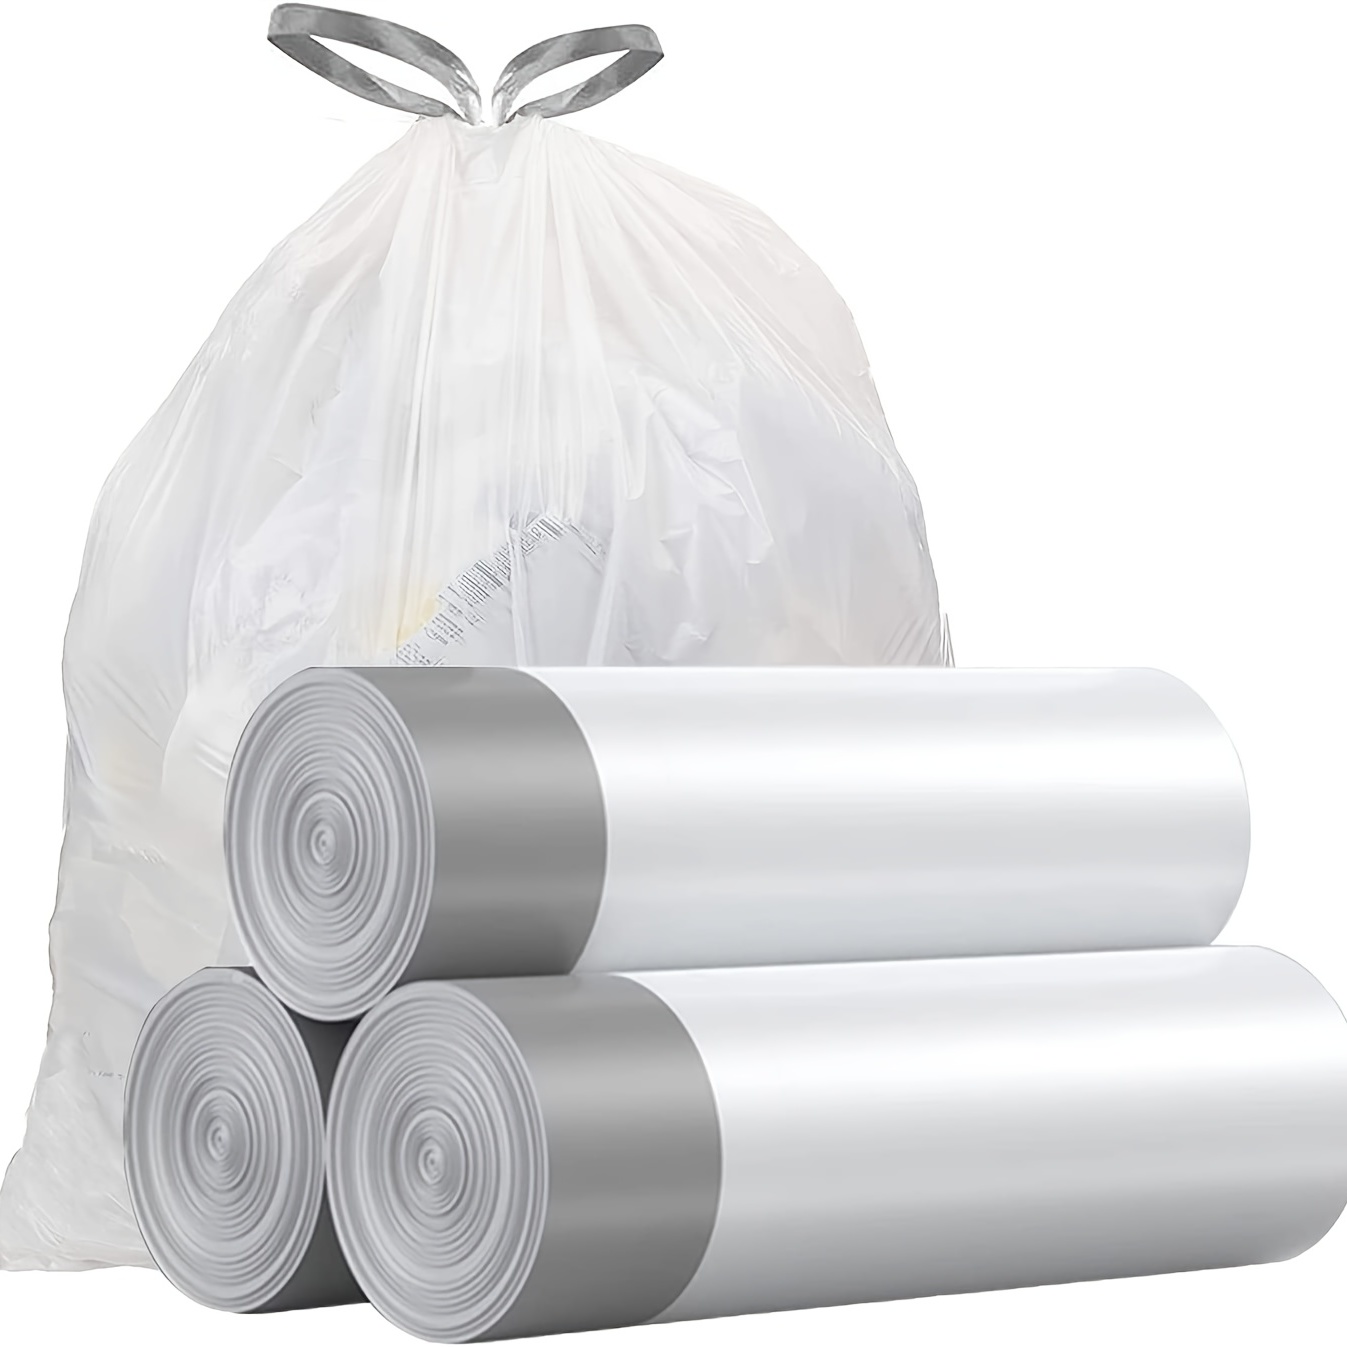 3 Rolls 60pcs White Plastic Rubbish Trash Bags Kitchen Garbage Bag